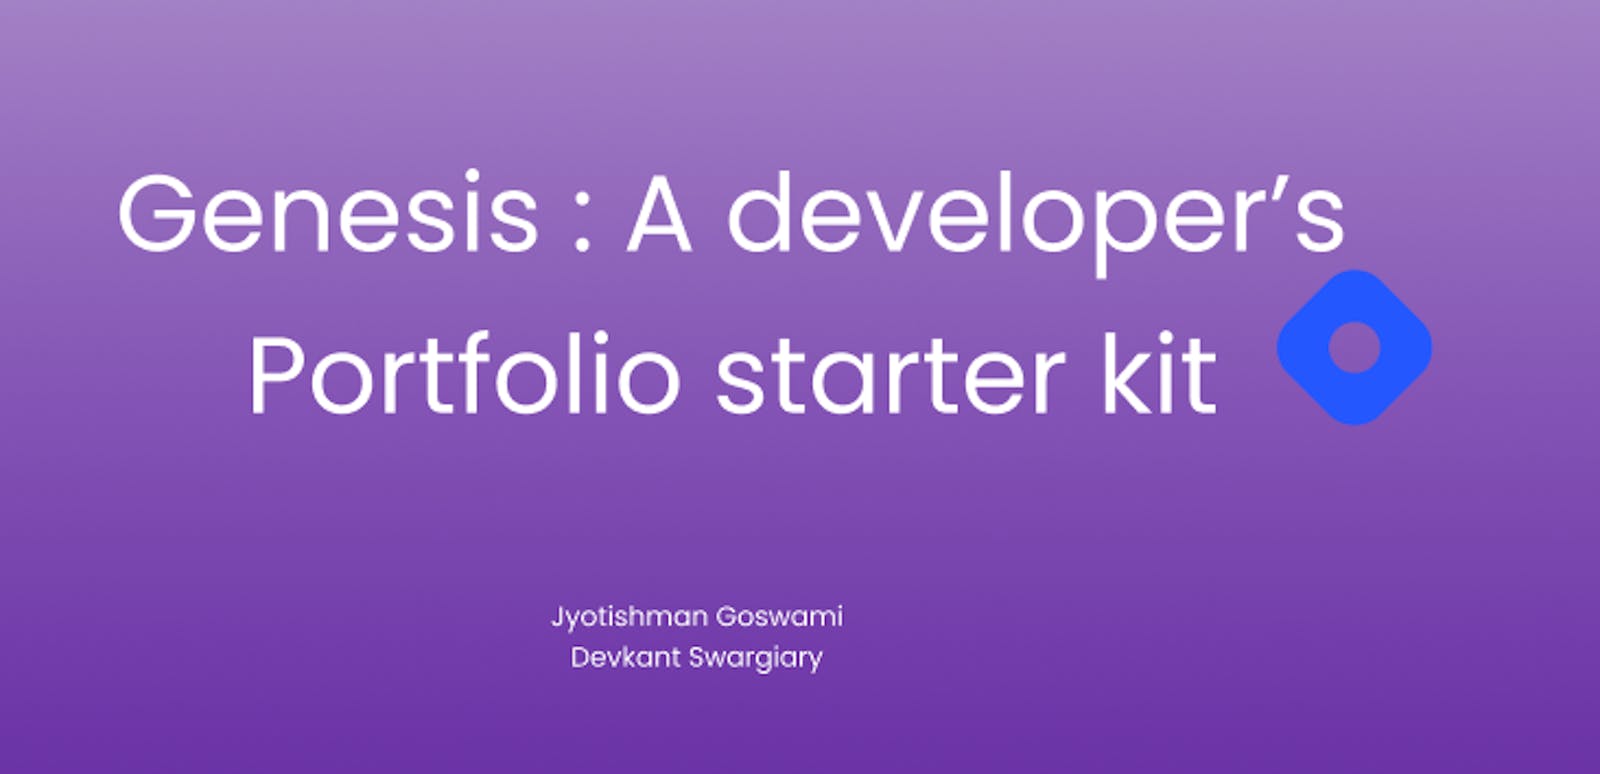 Genesis : A developer's Portfolio starter kit